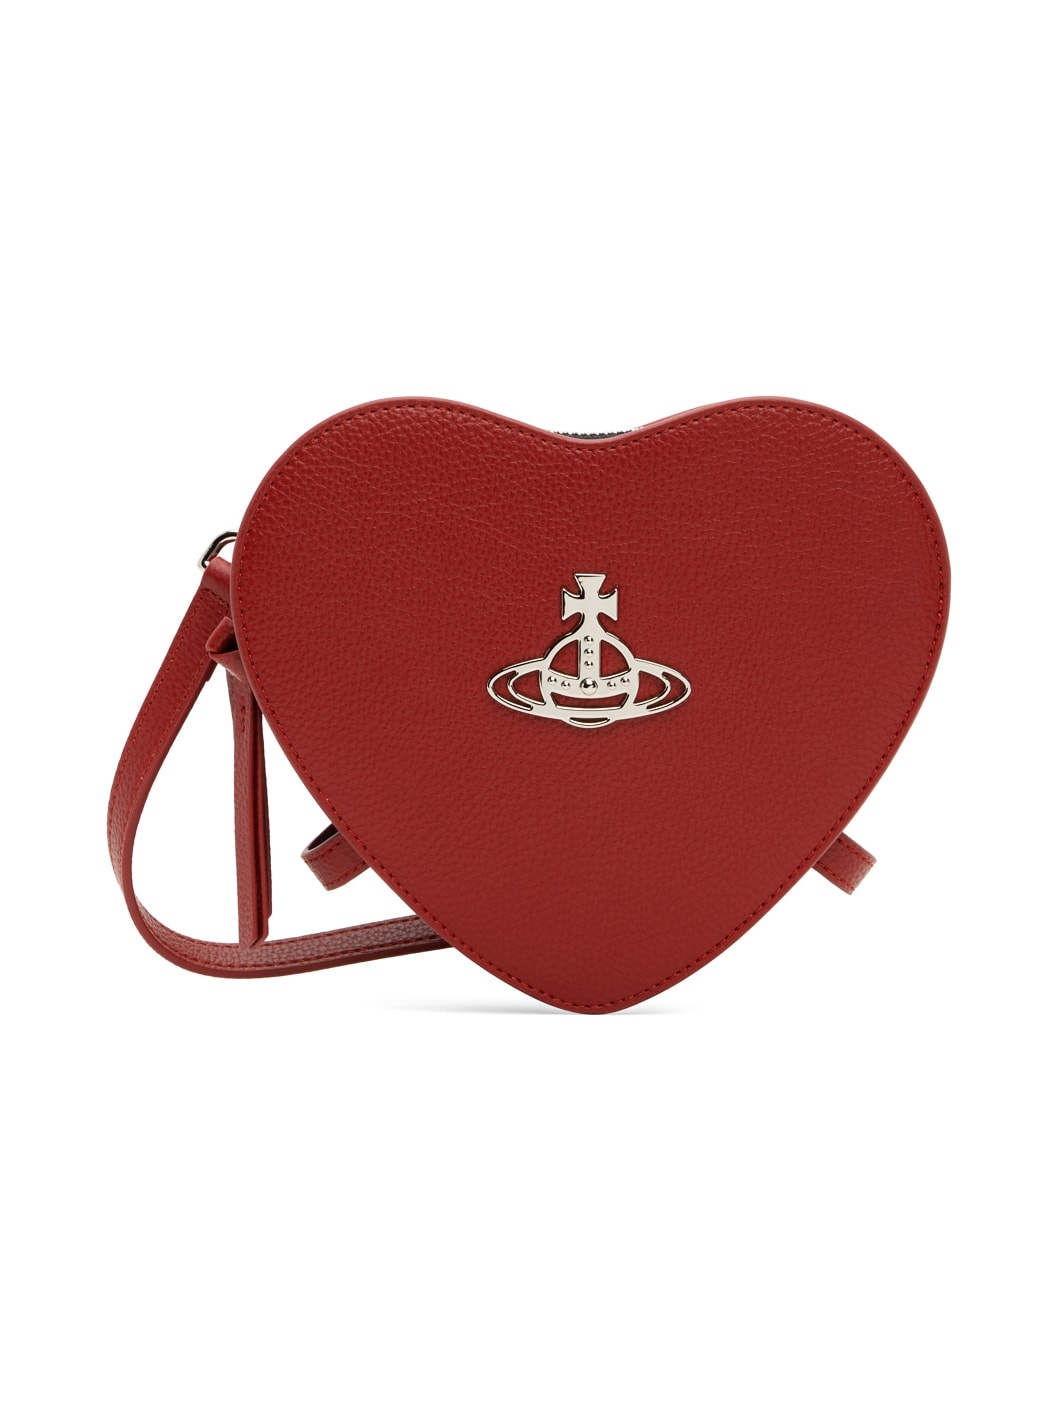 Red Louise Heart Crossbody Bag - 1